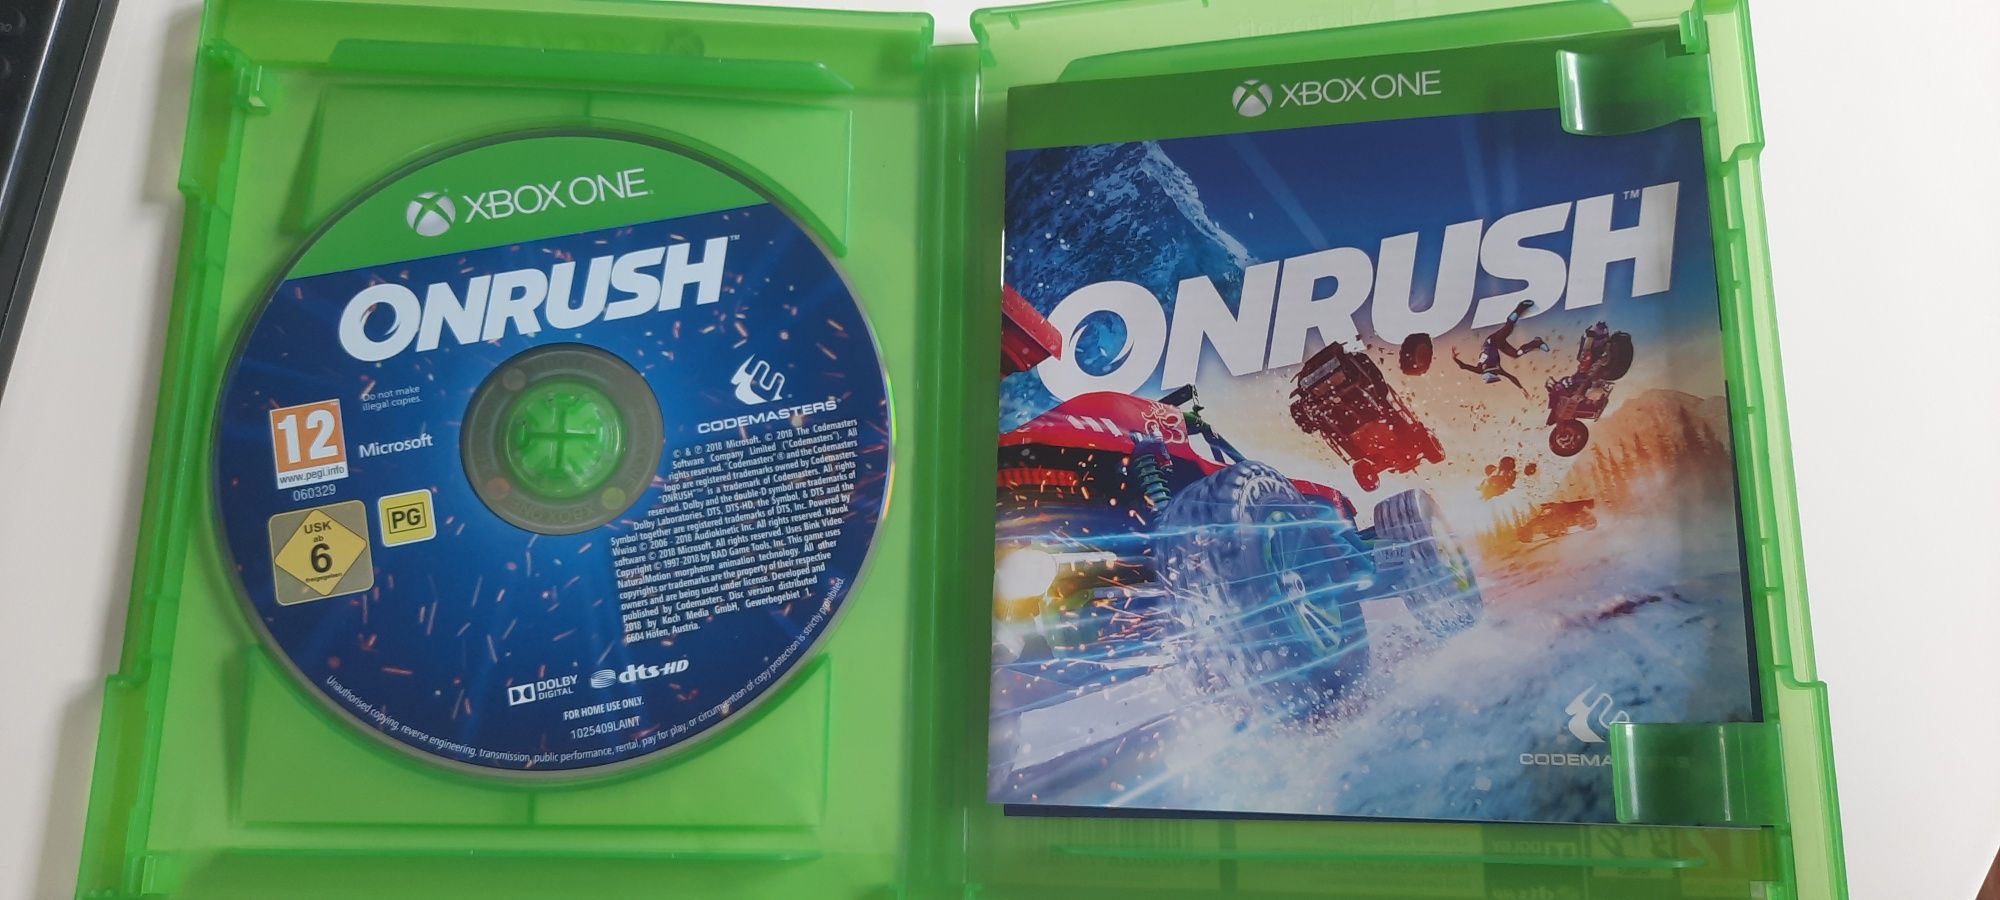 Onrush. Day one edition. Xbox one wersja PL